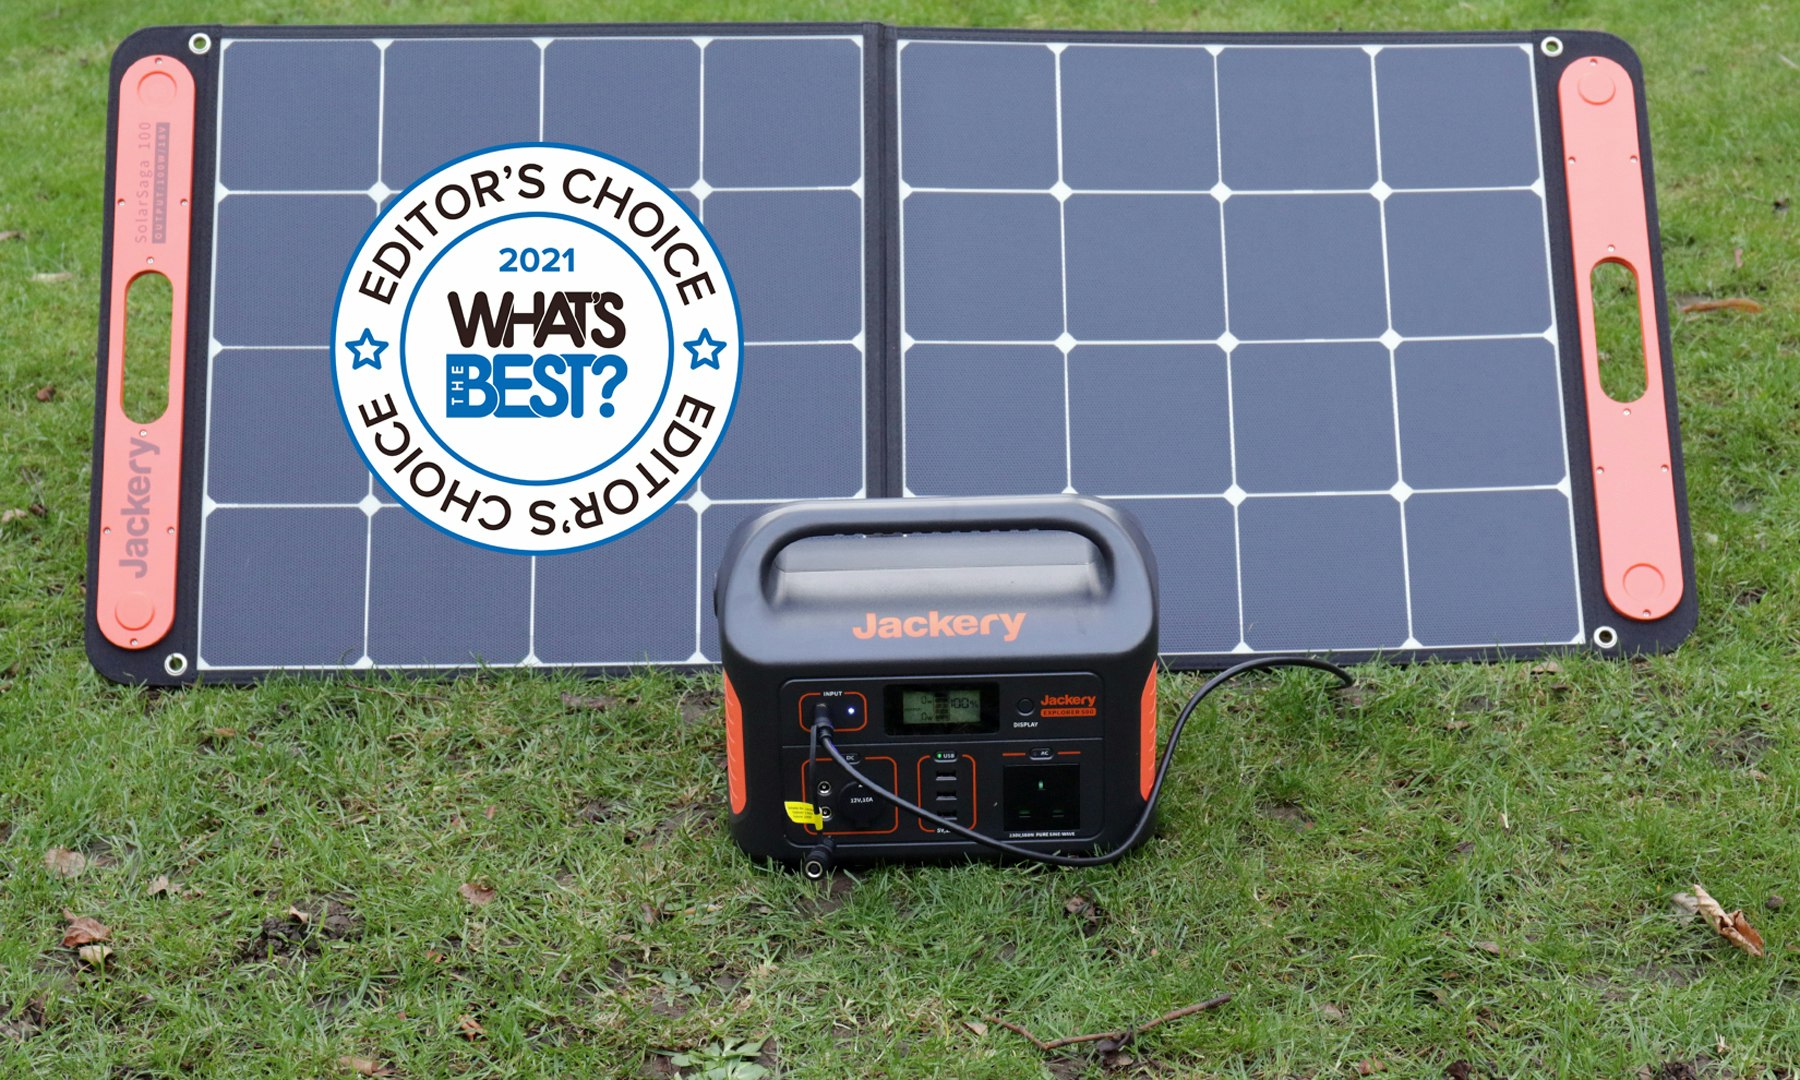 Jackery Explorer Portable Power Station and SolarSaga Solar Panel Review